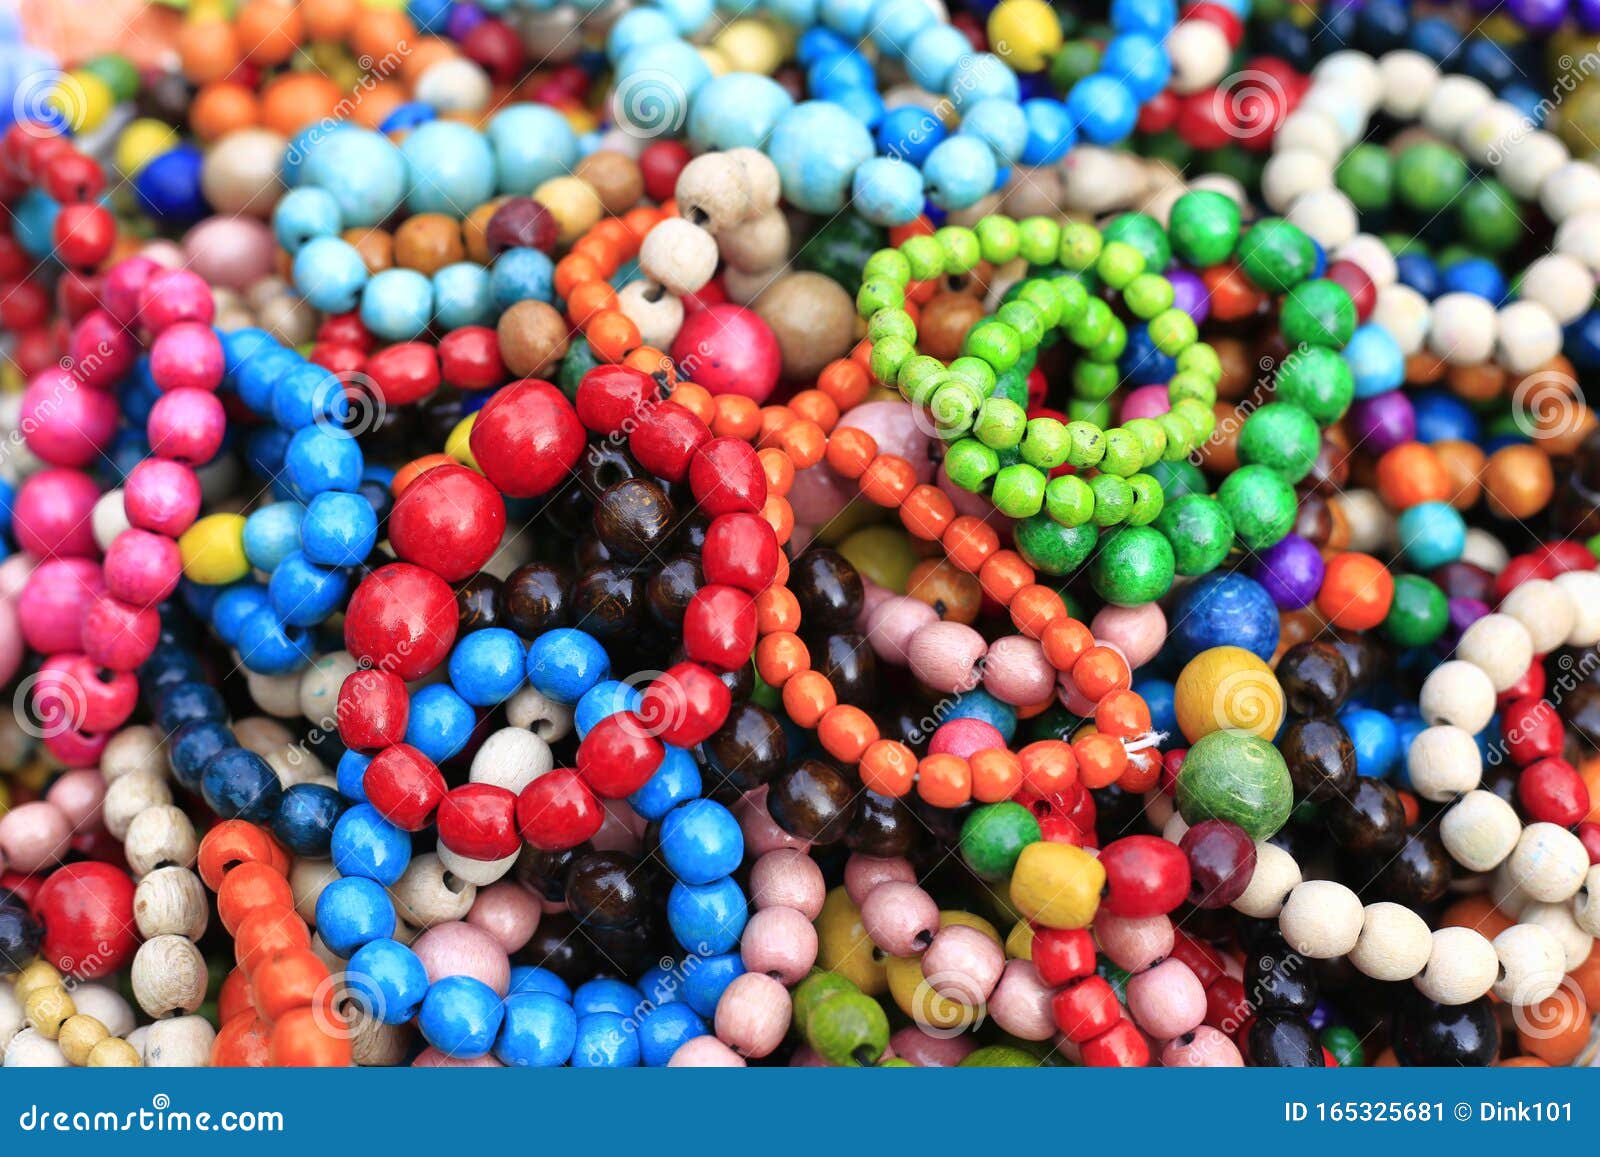 Colorful Handmade Wooden Bracelets, Close-up Background Stock Image ...